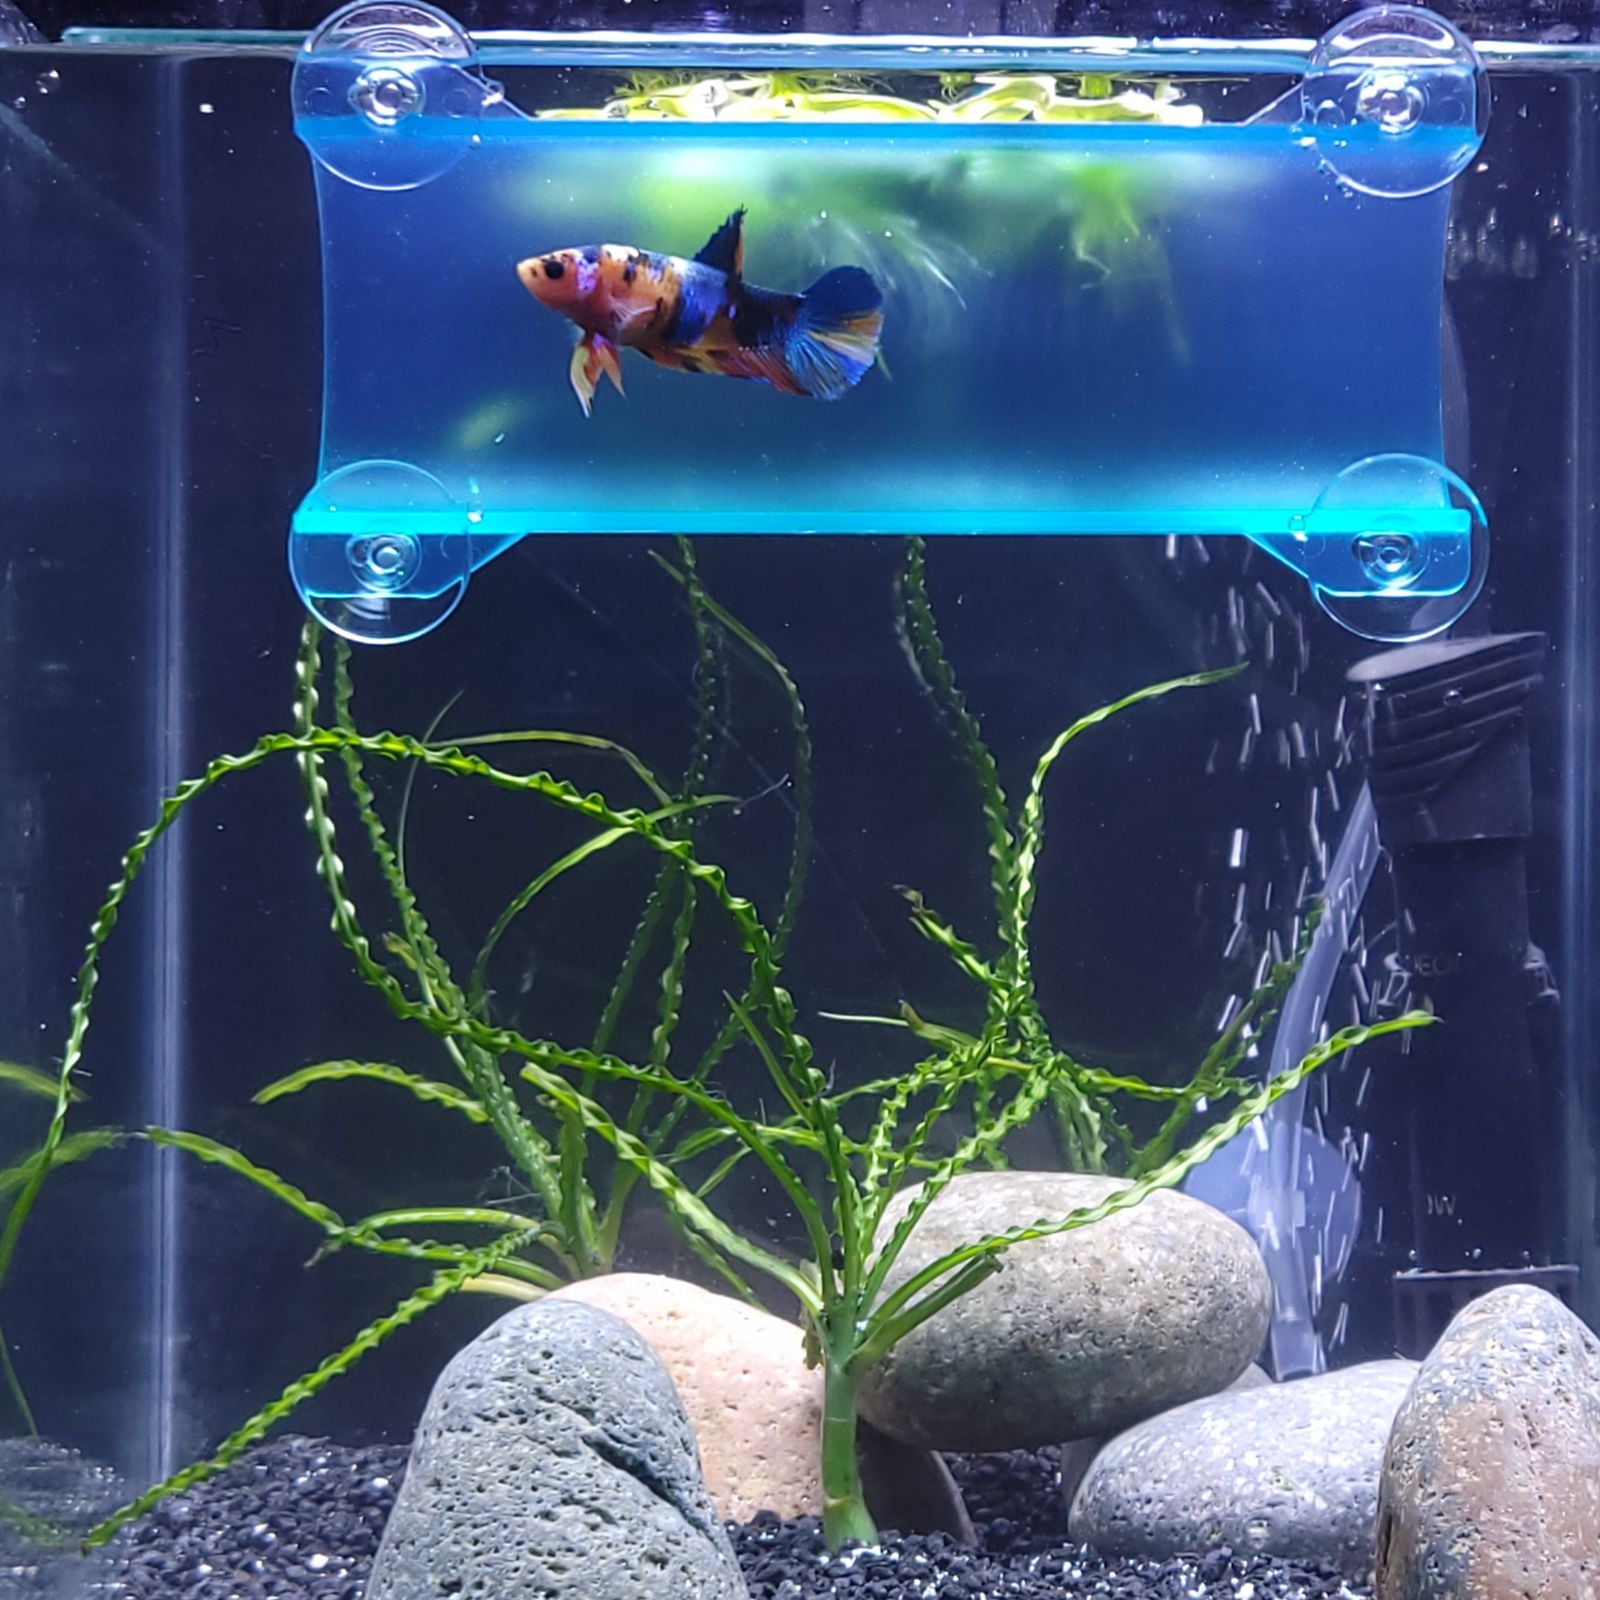 2 Pcs Aquarium Landscaping Grass Betta Fish Accessory for Tank